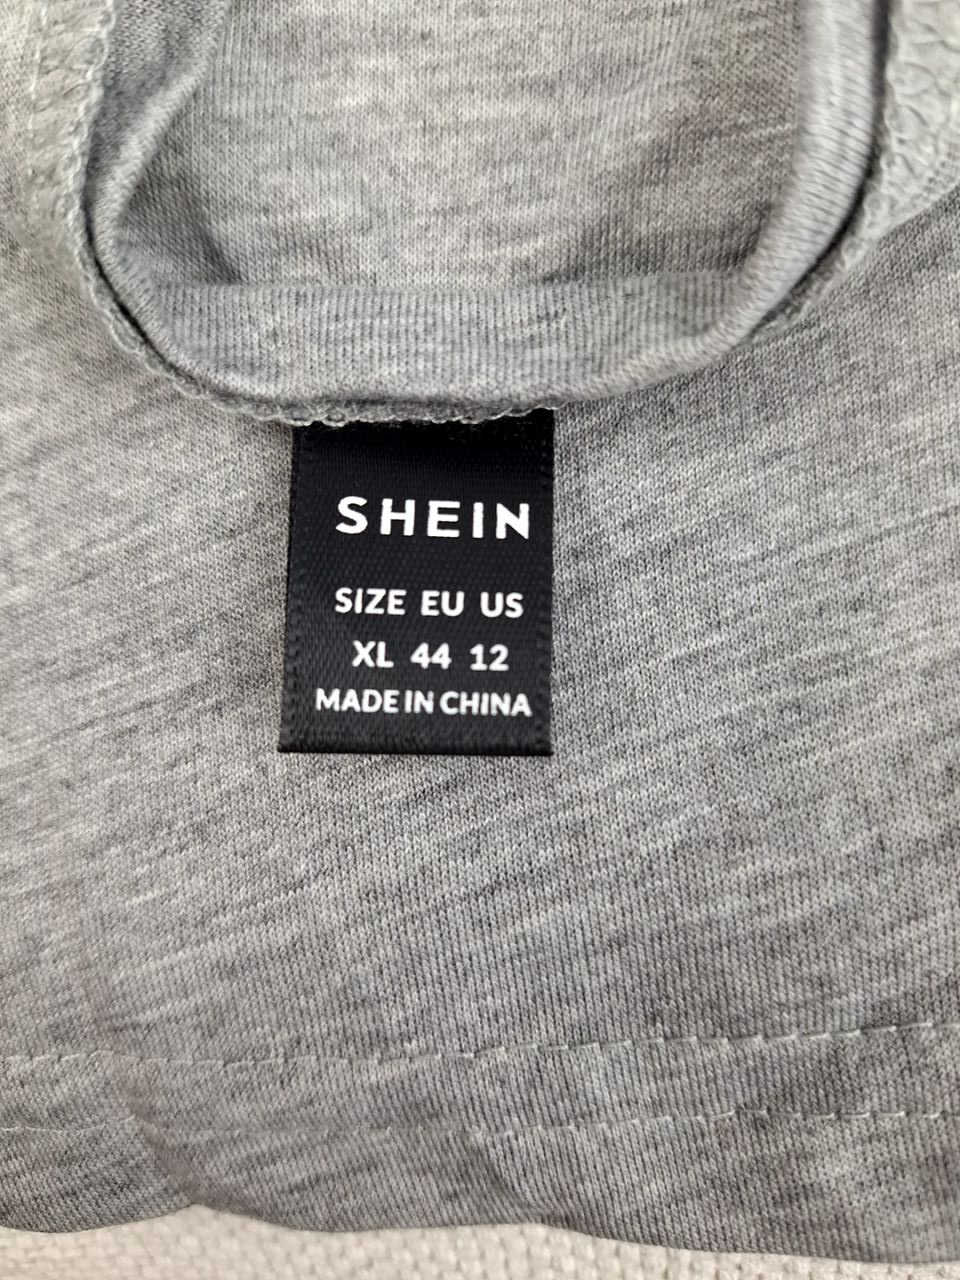 Dámské triko / bez rukávů SHEIN vel. XL